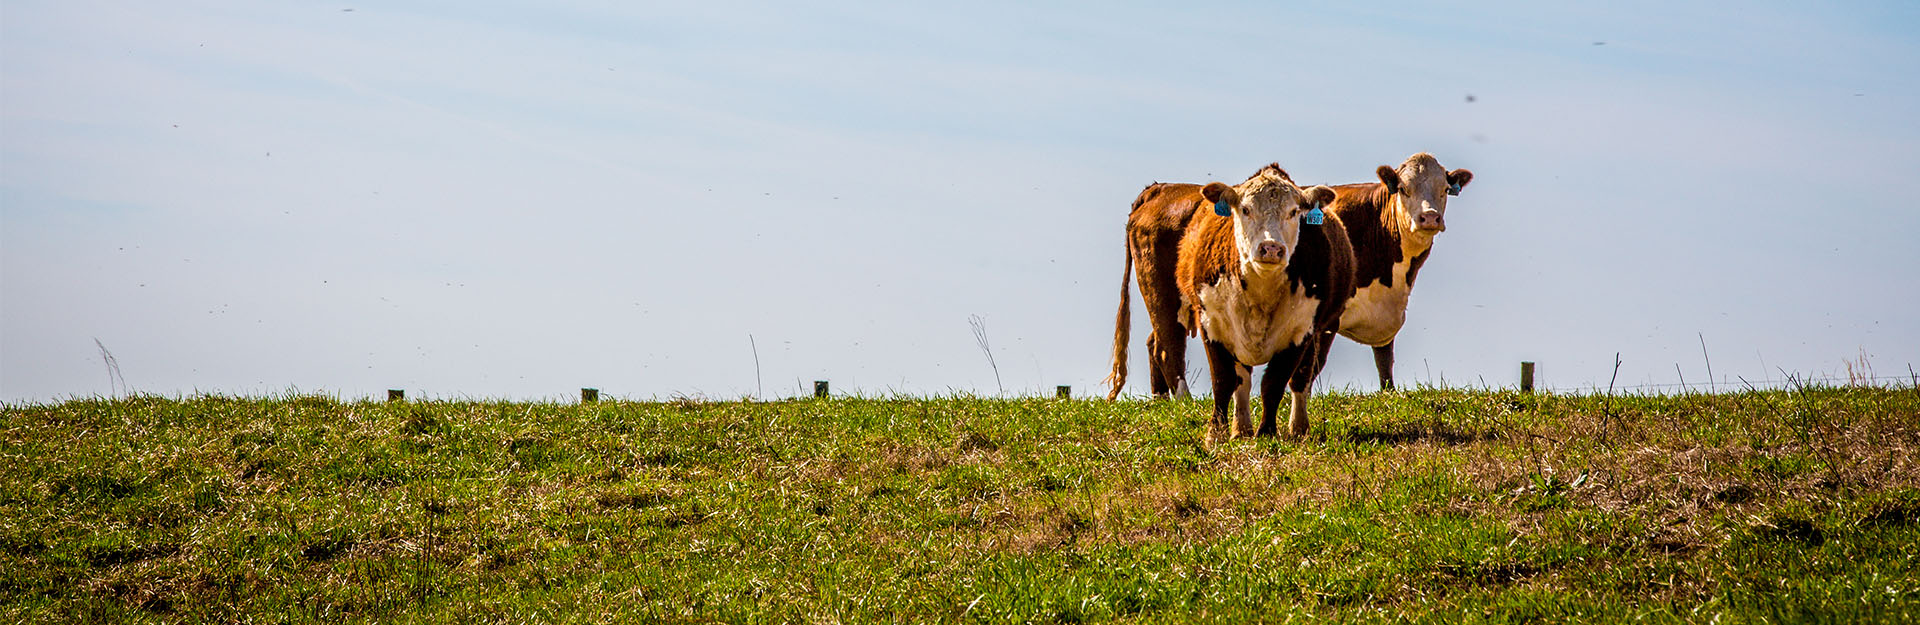 bulls in a field